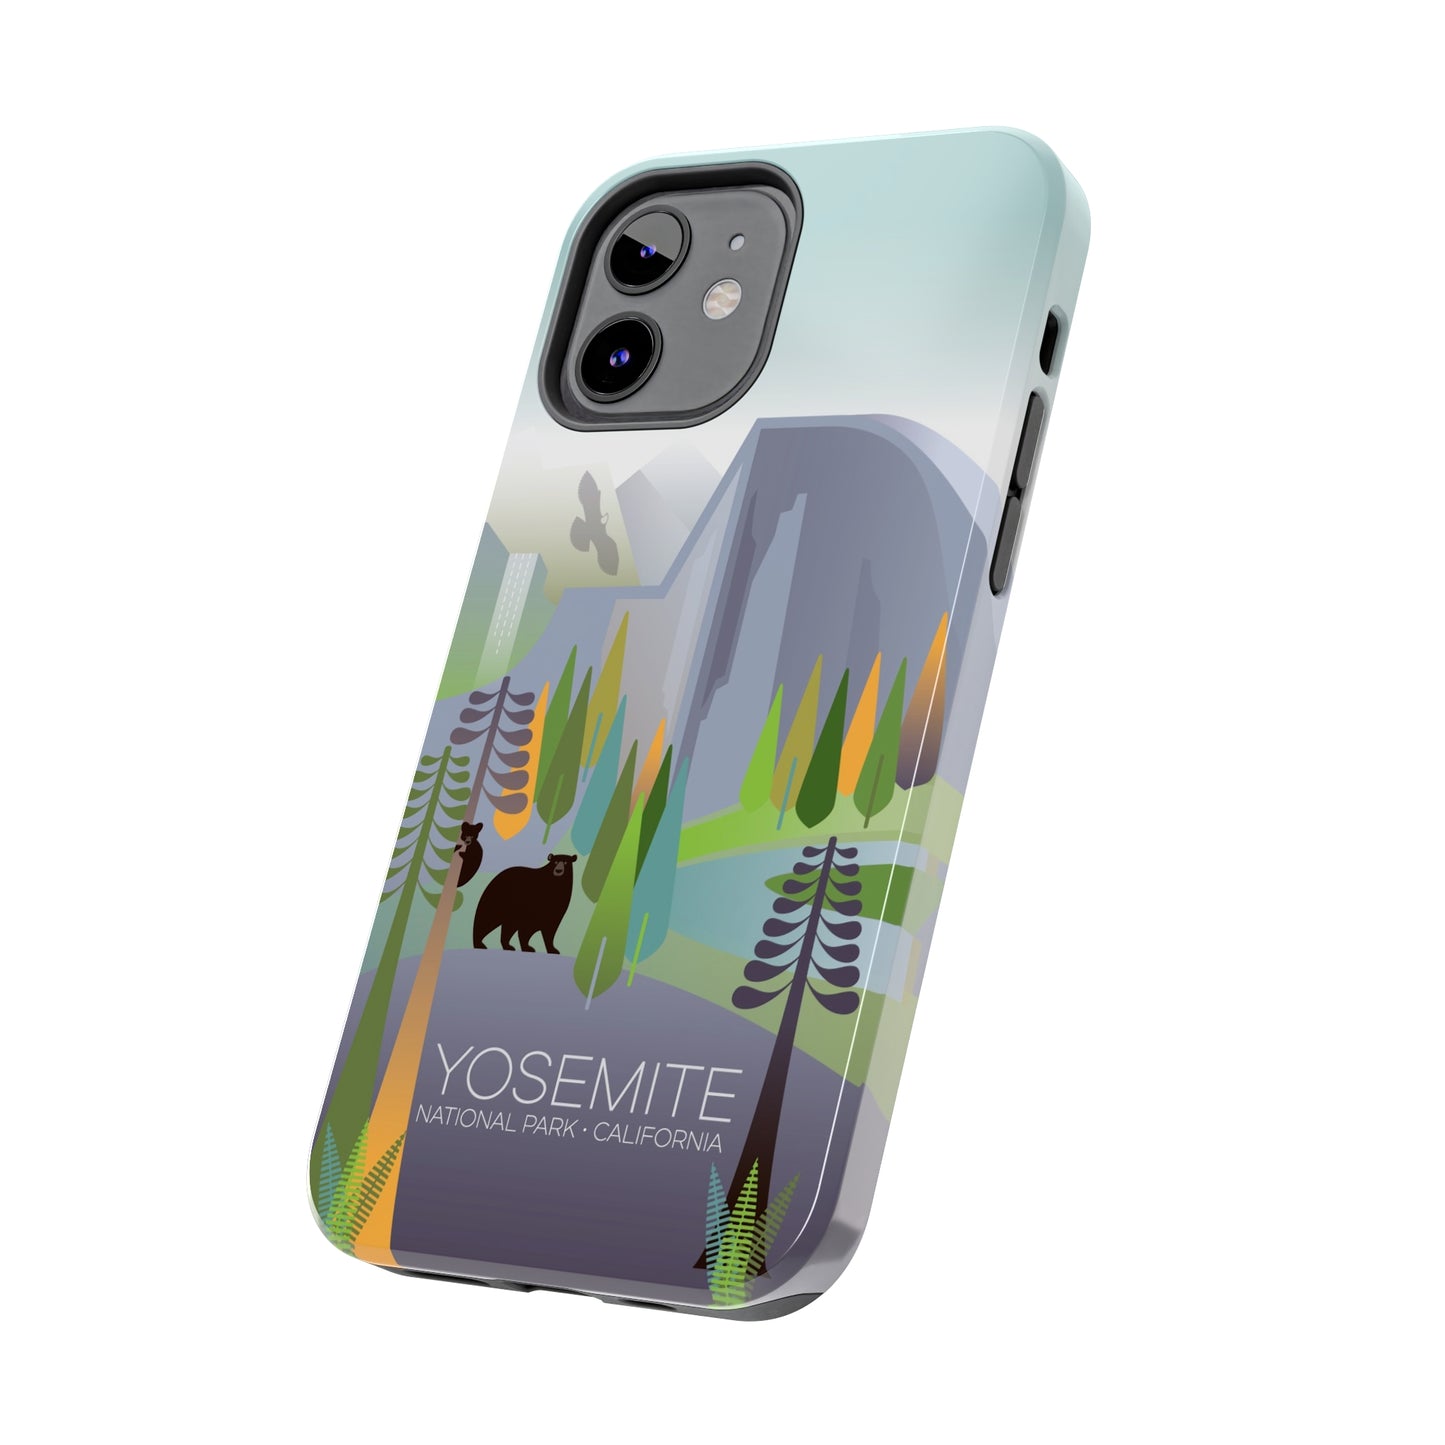 Yosemite National Park Phone Case